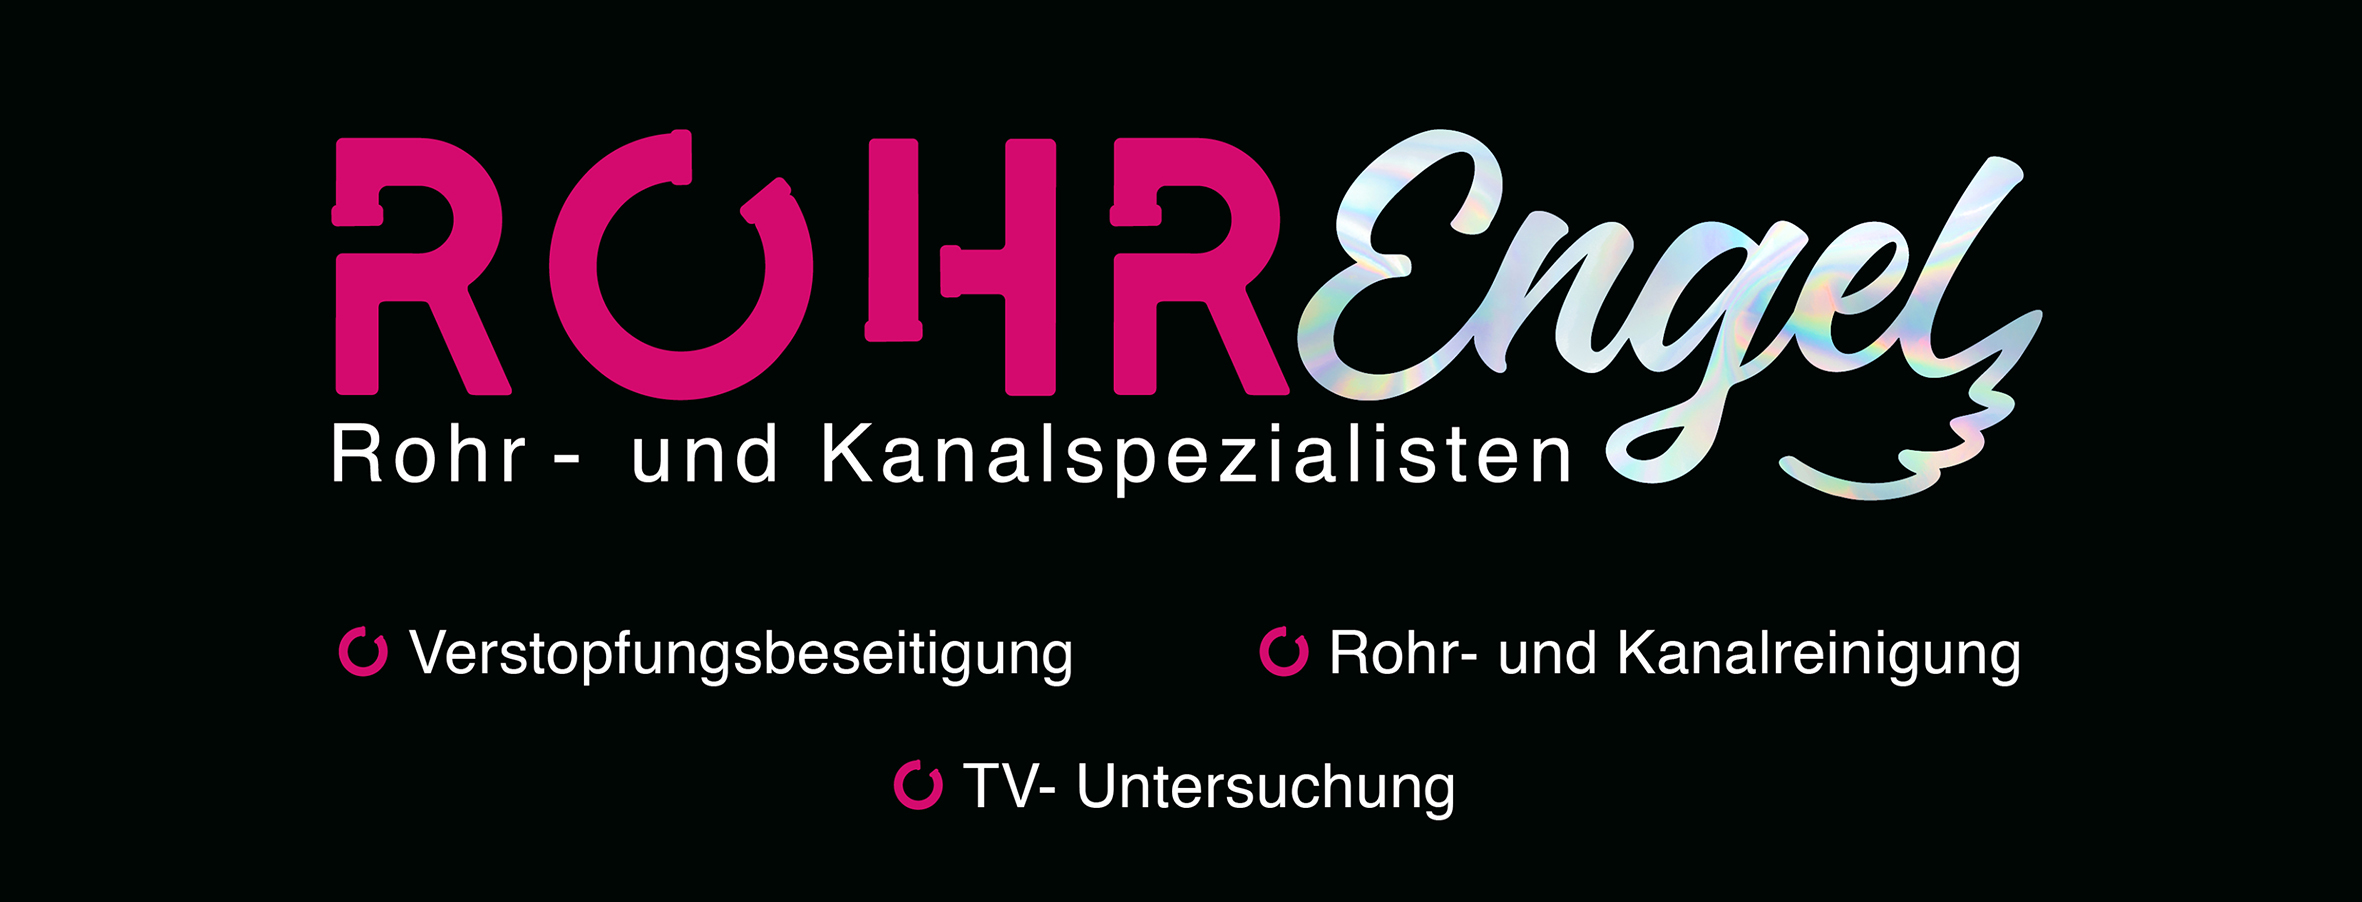 RohrEngel GmbH